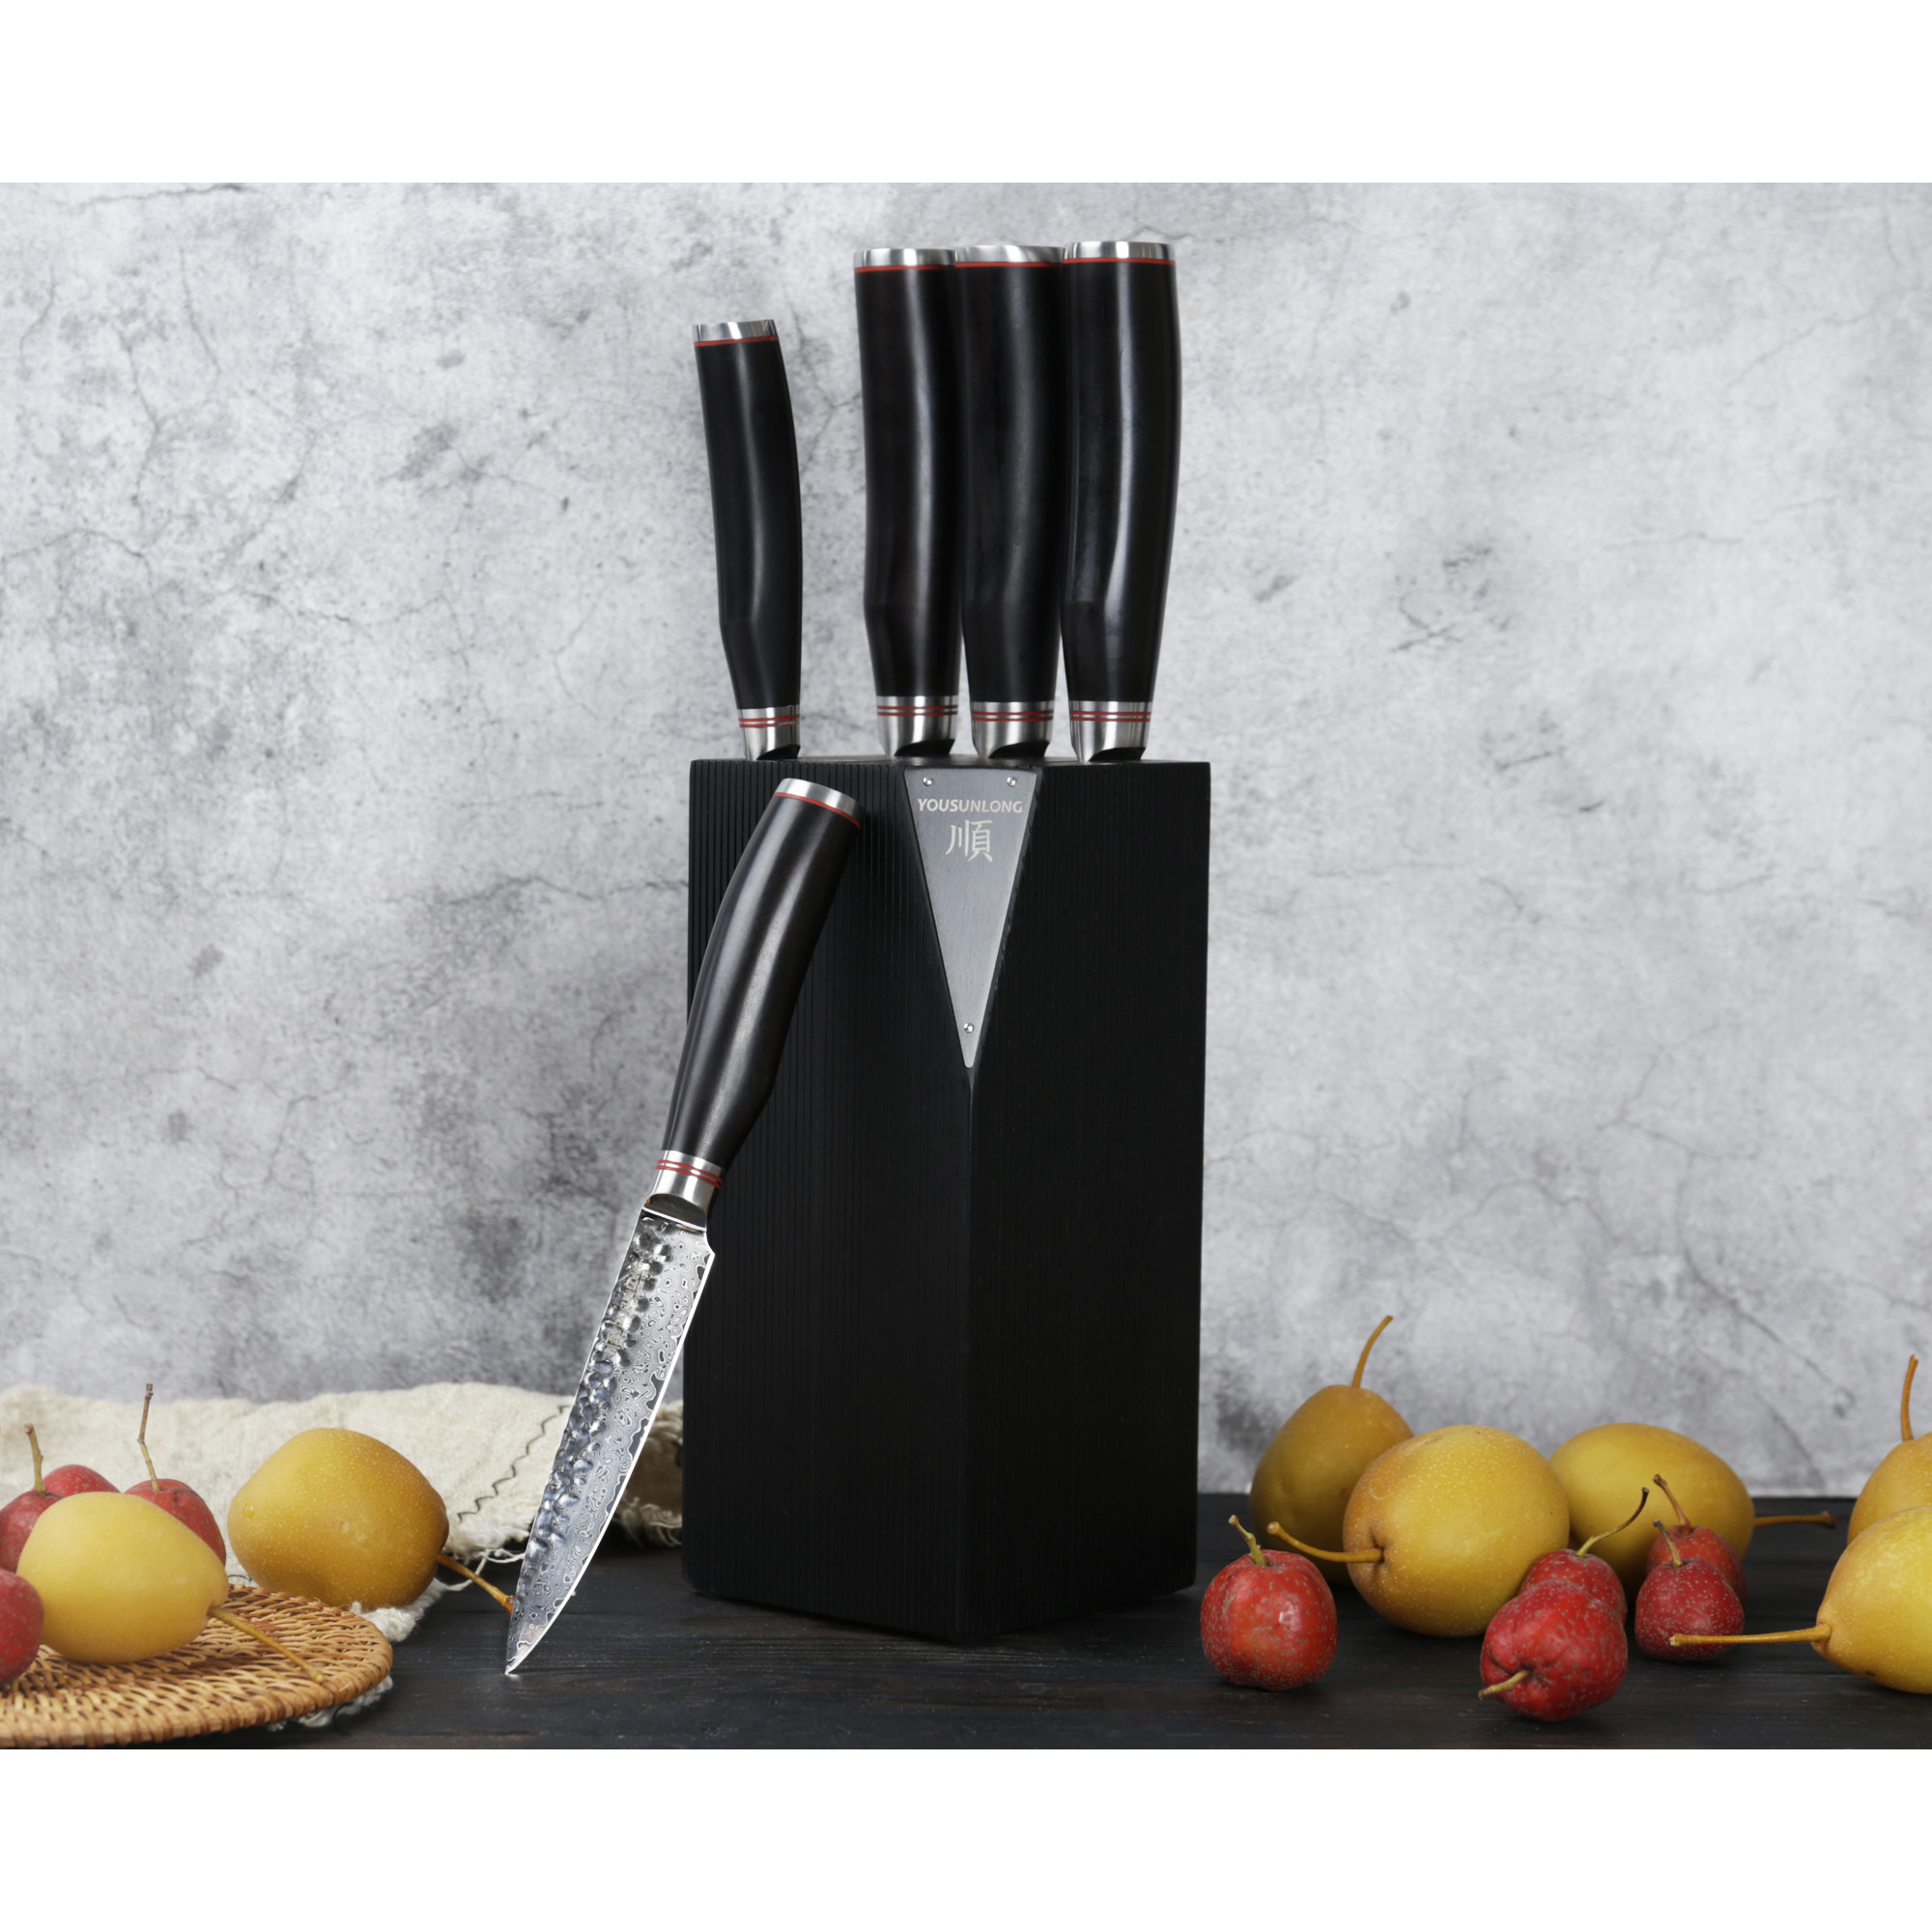 Yousunlong Knife Block Sets - 5pcs Kitchen Knives Set Japanese Aus8 Steel Black Titanium with Gift Box